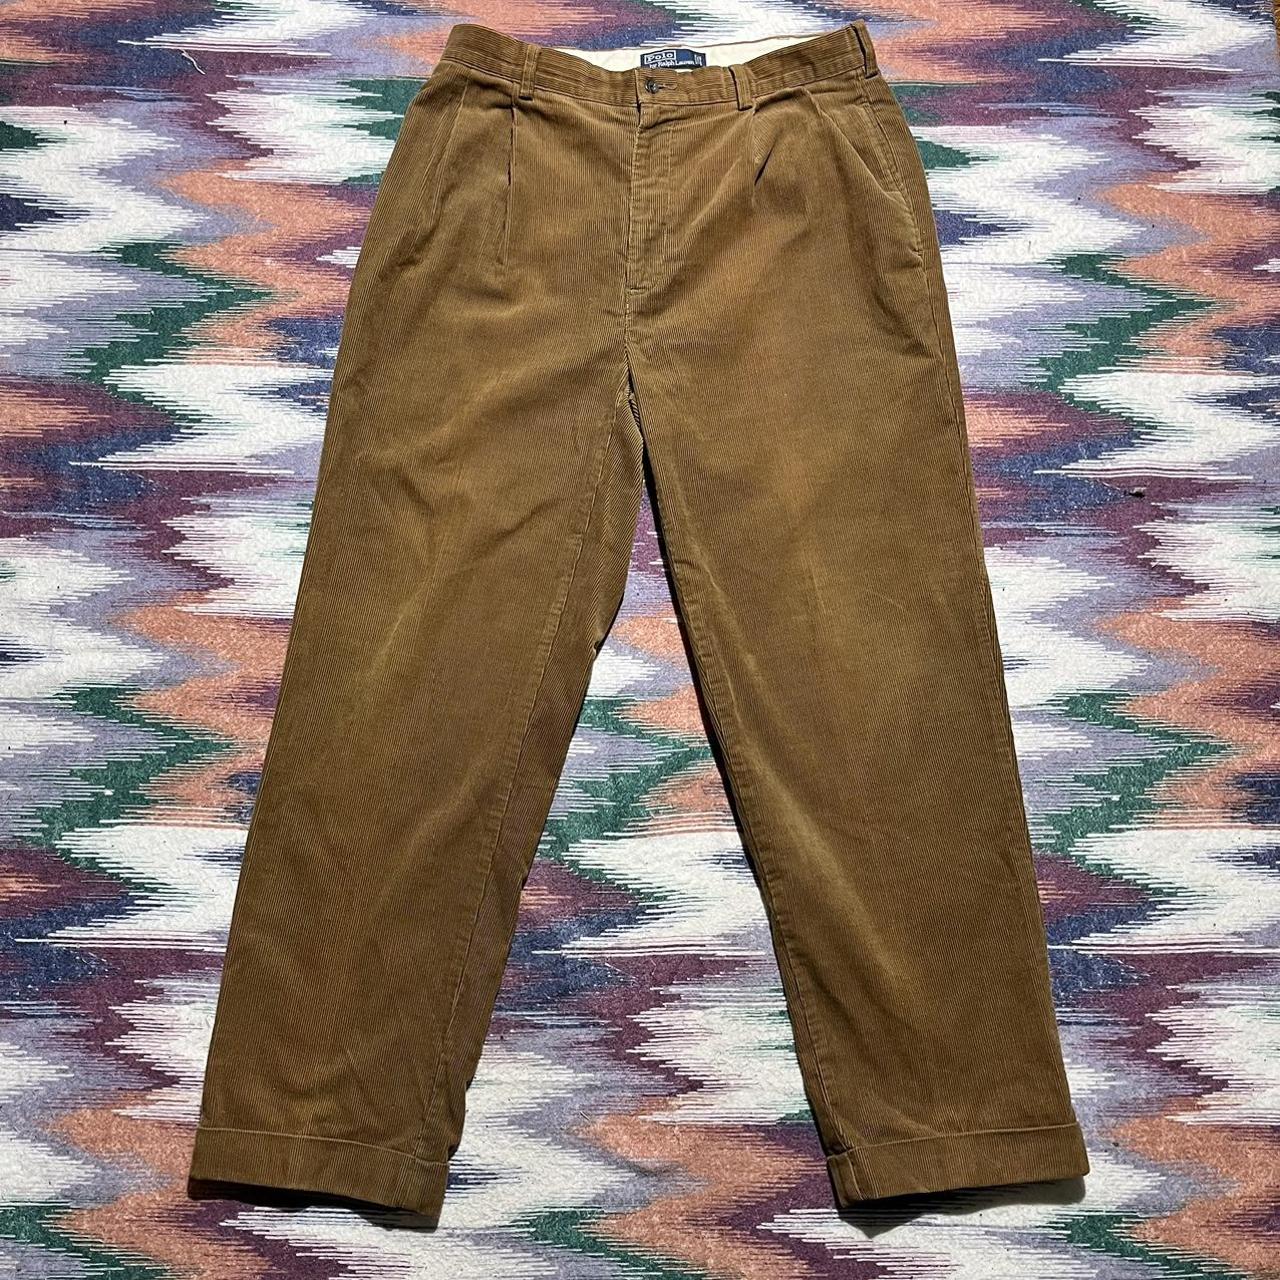 Vintage Polo Ralph Lauren Corduroy Pants 34x30 90s... - Depop